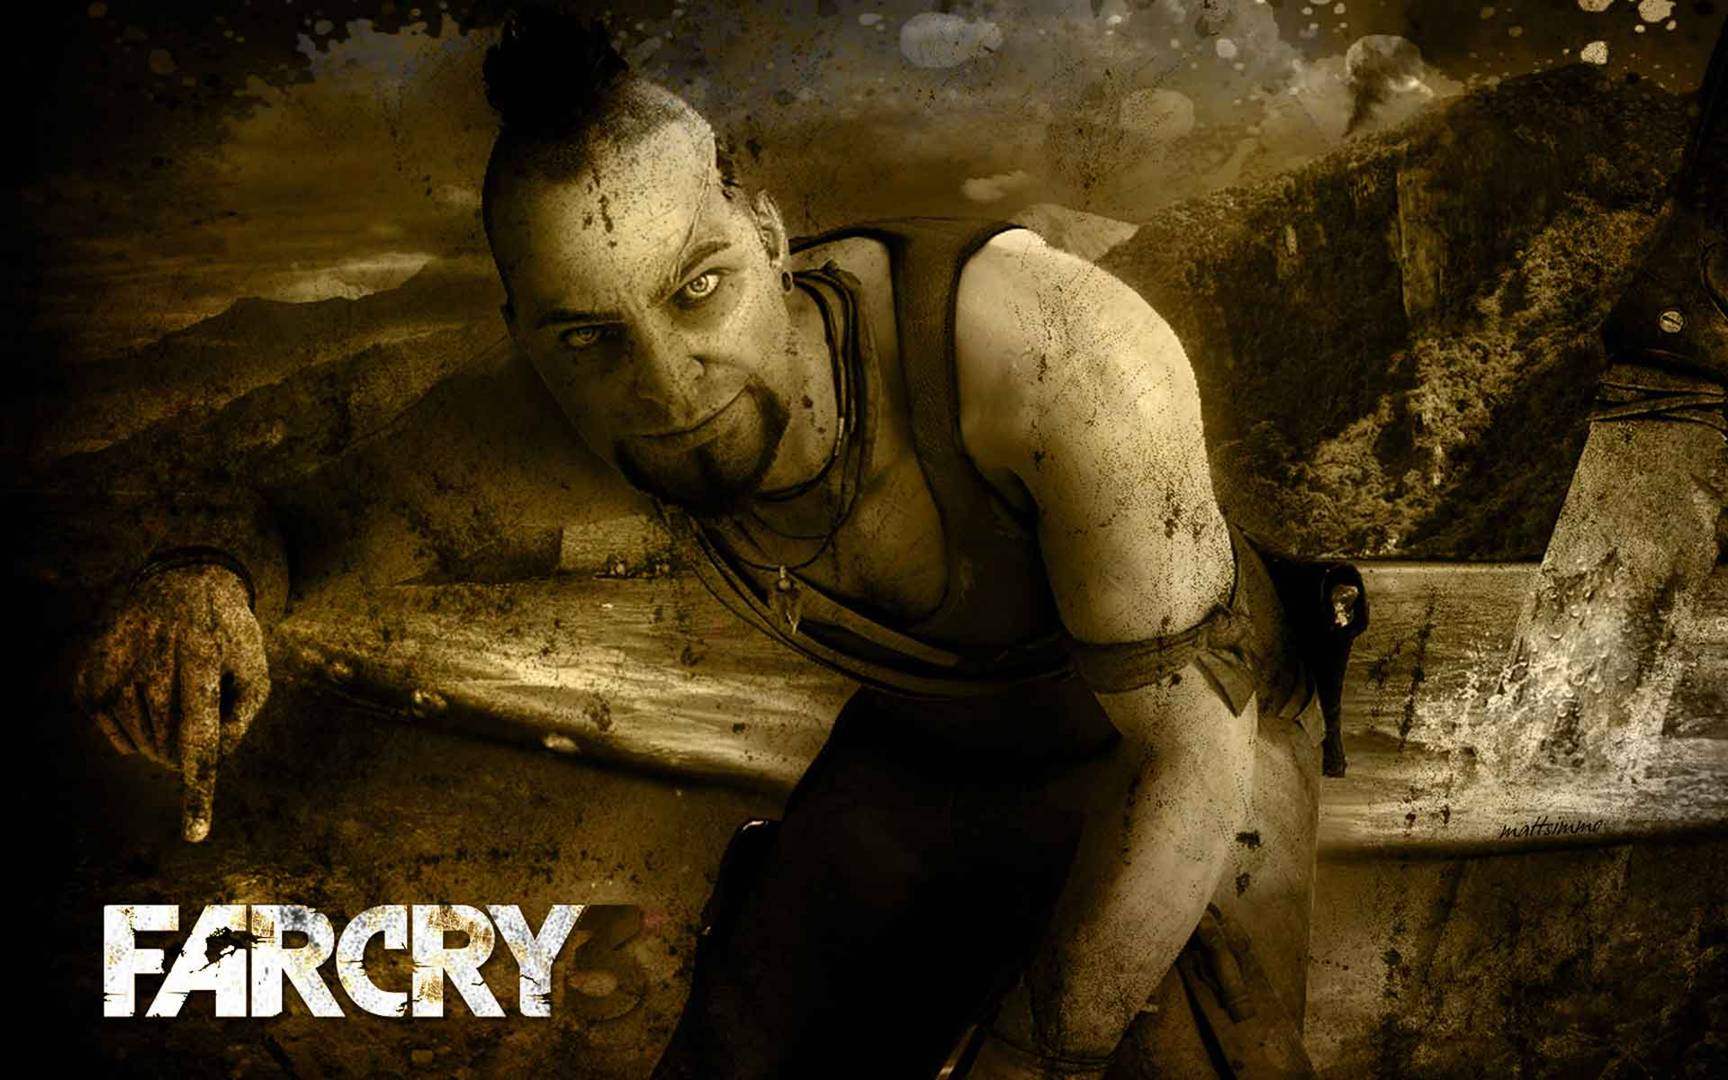 Far Cry 3 Wallpaper hd 1080p Far Cry 3 Wallpaper Jpg 1728x1080